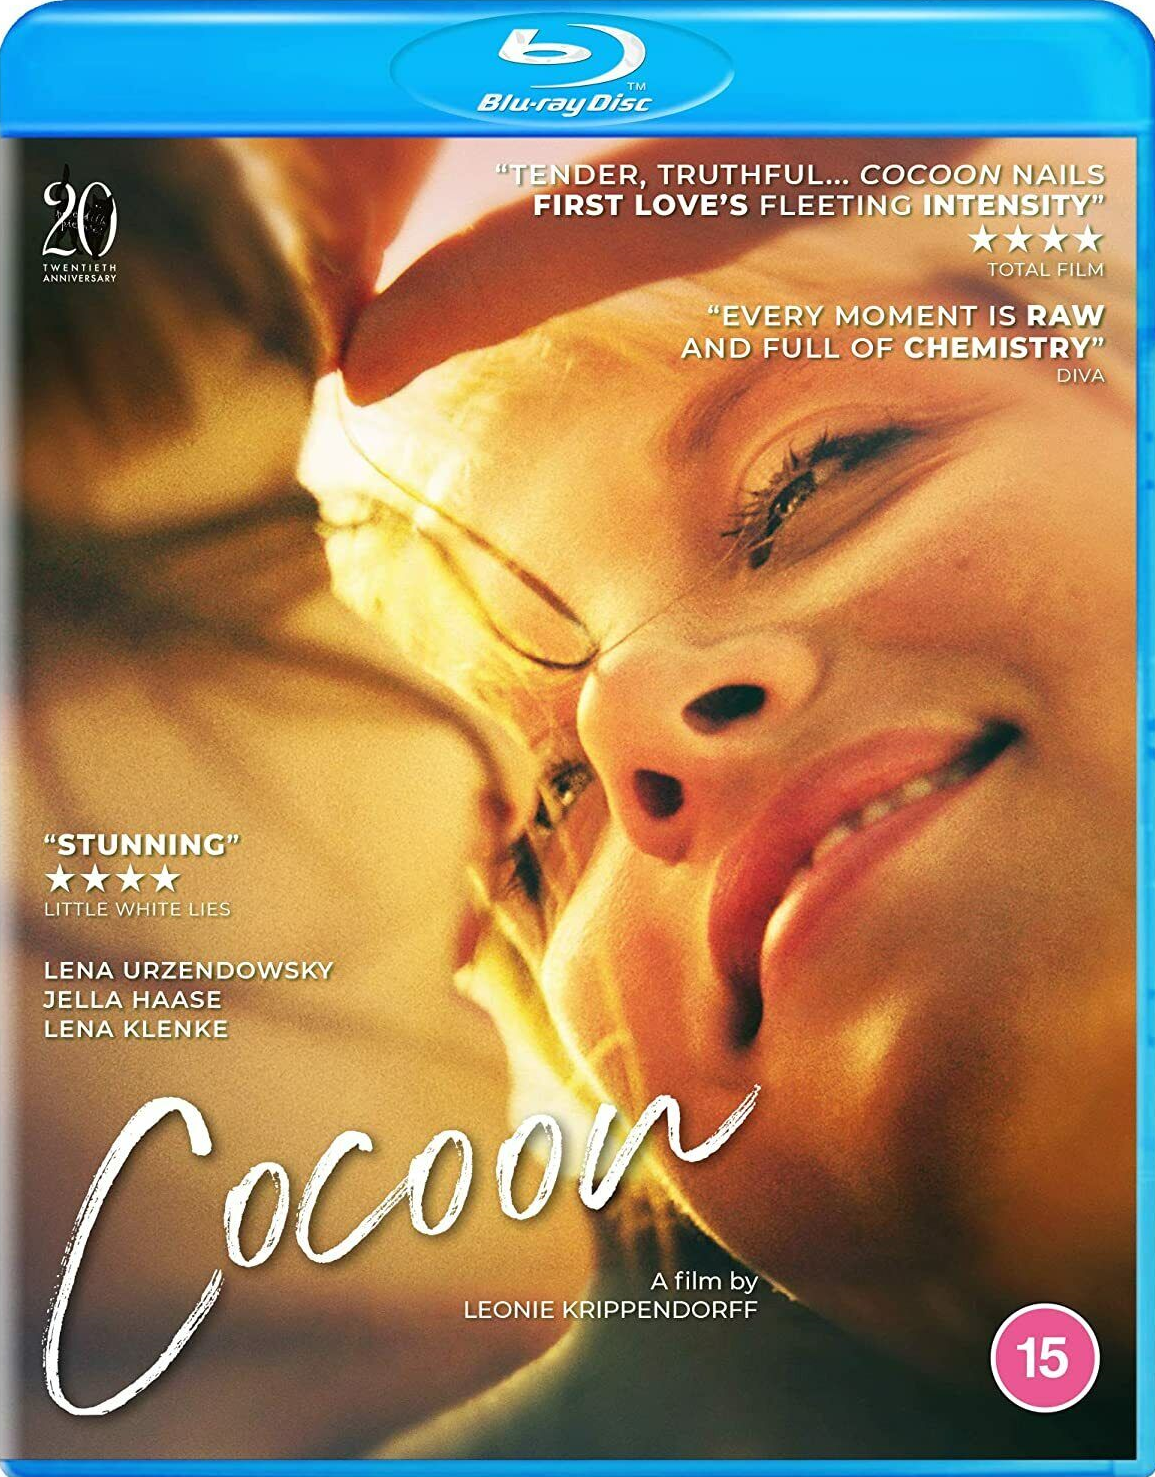 COCOON (2020) 1080p Bluray DTS-HD MA5.1 RETAIL NL Sub [UFR Primeur]